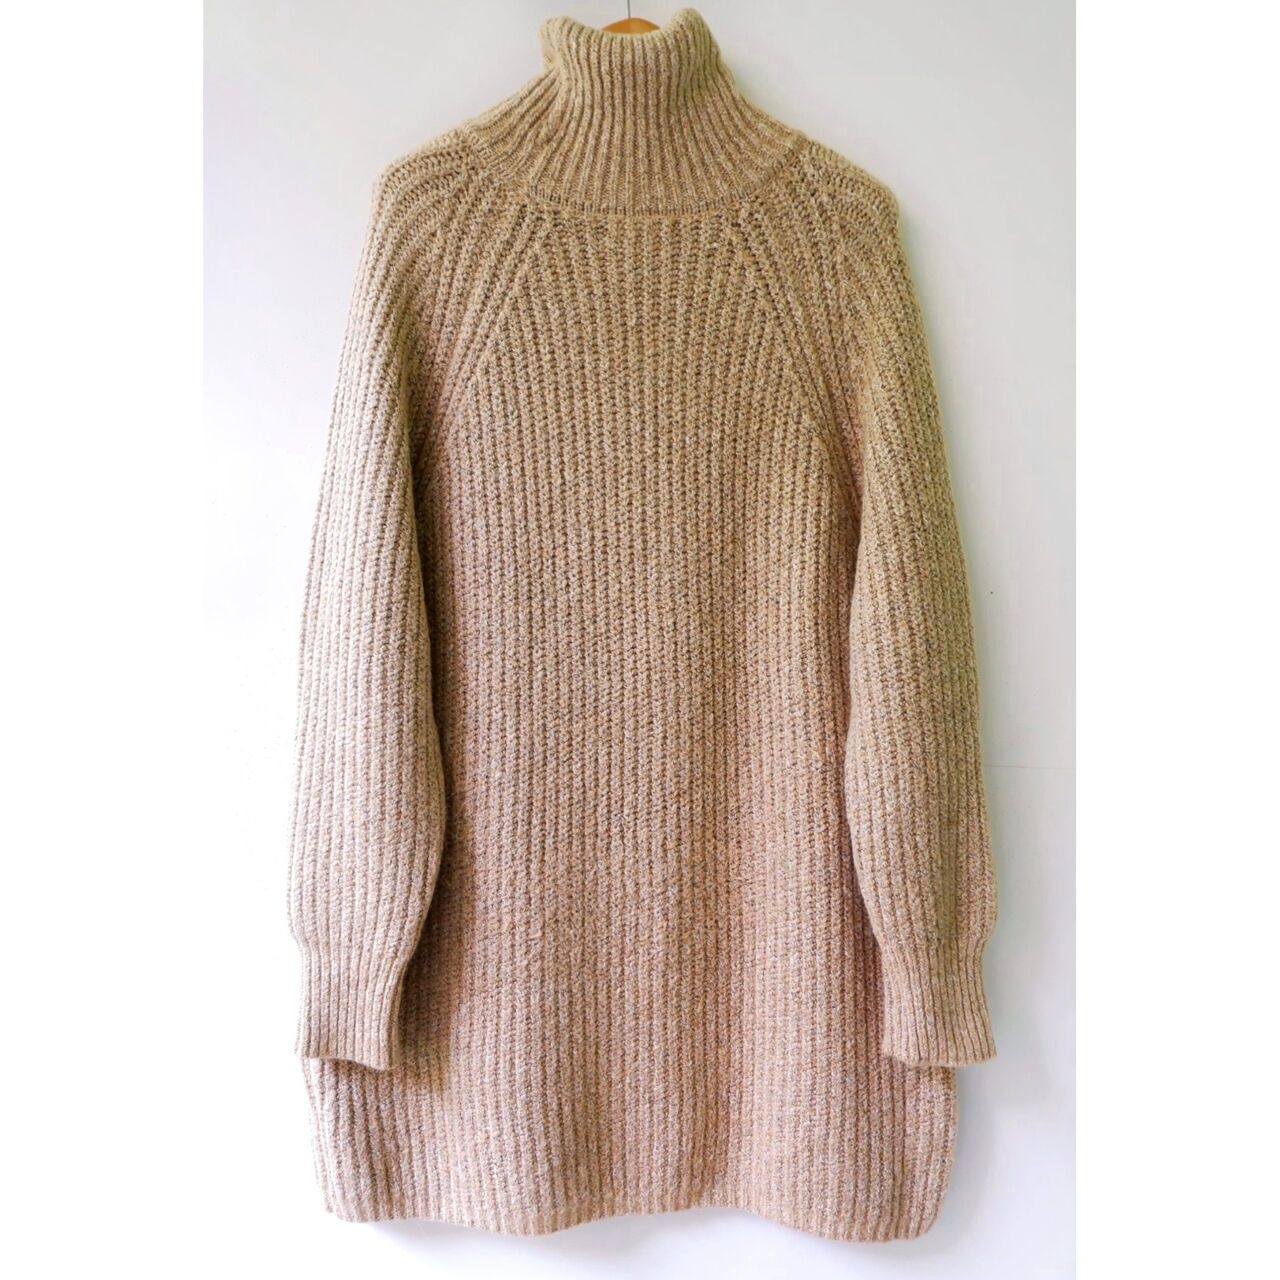 Asos Light Brown Sweater Dress